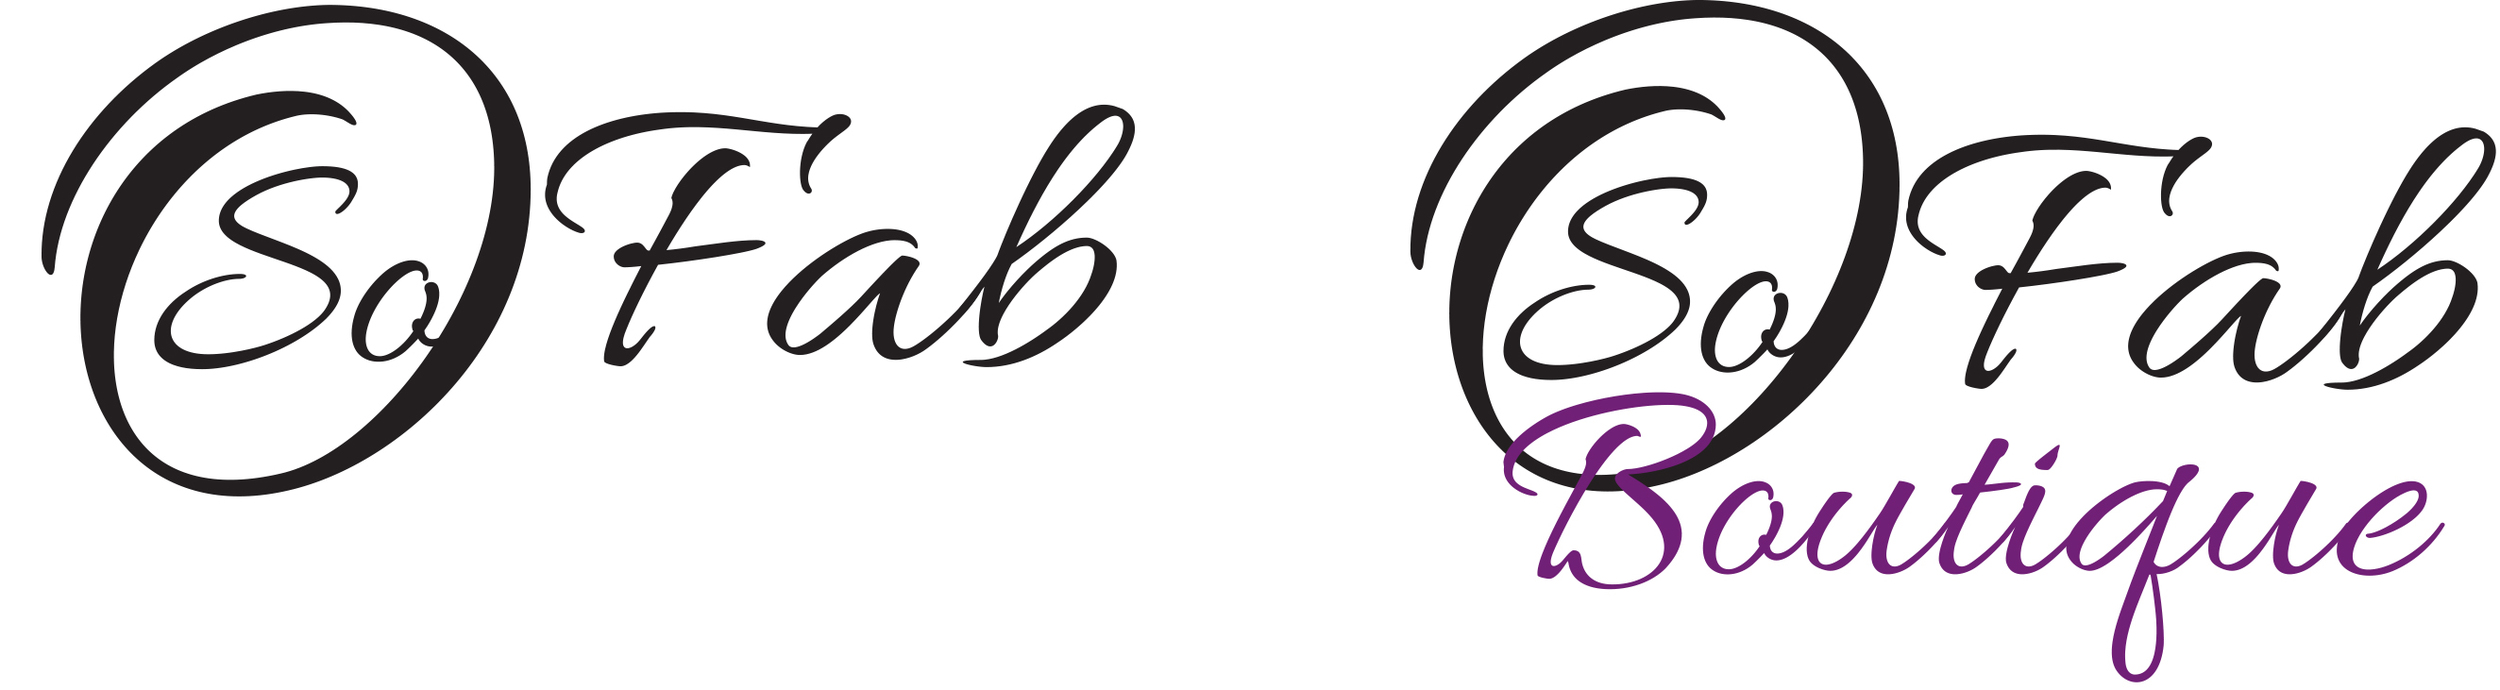 OSoFab Boutique Logos WS.jpg